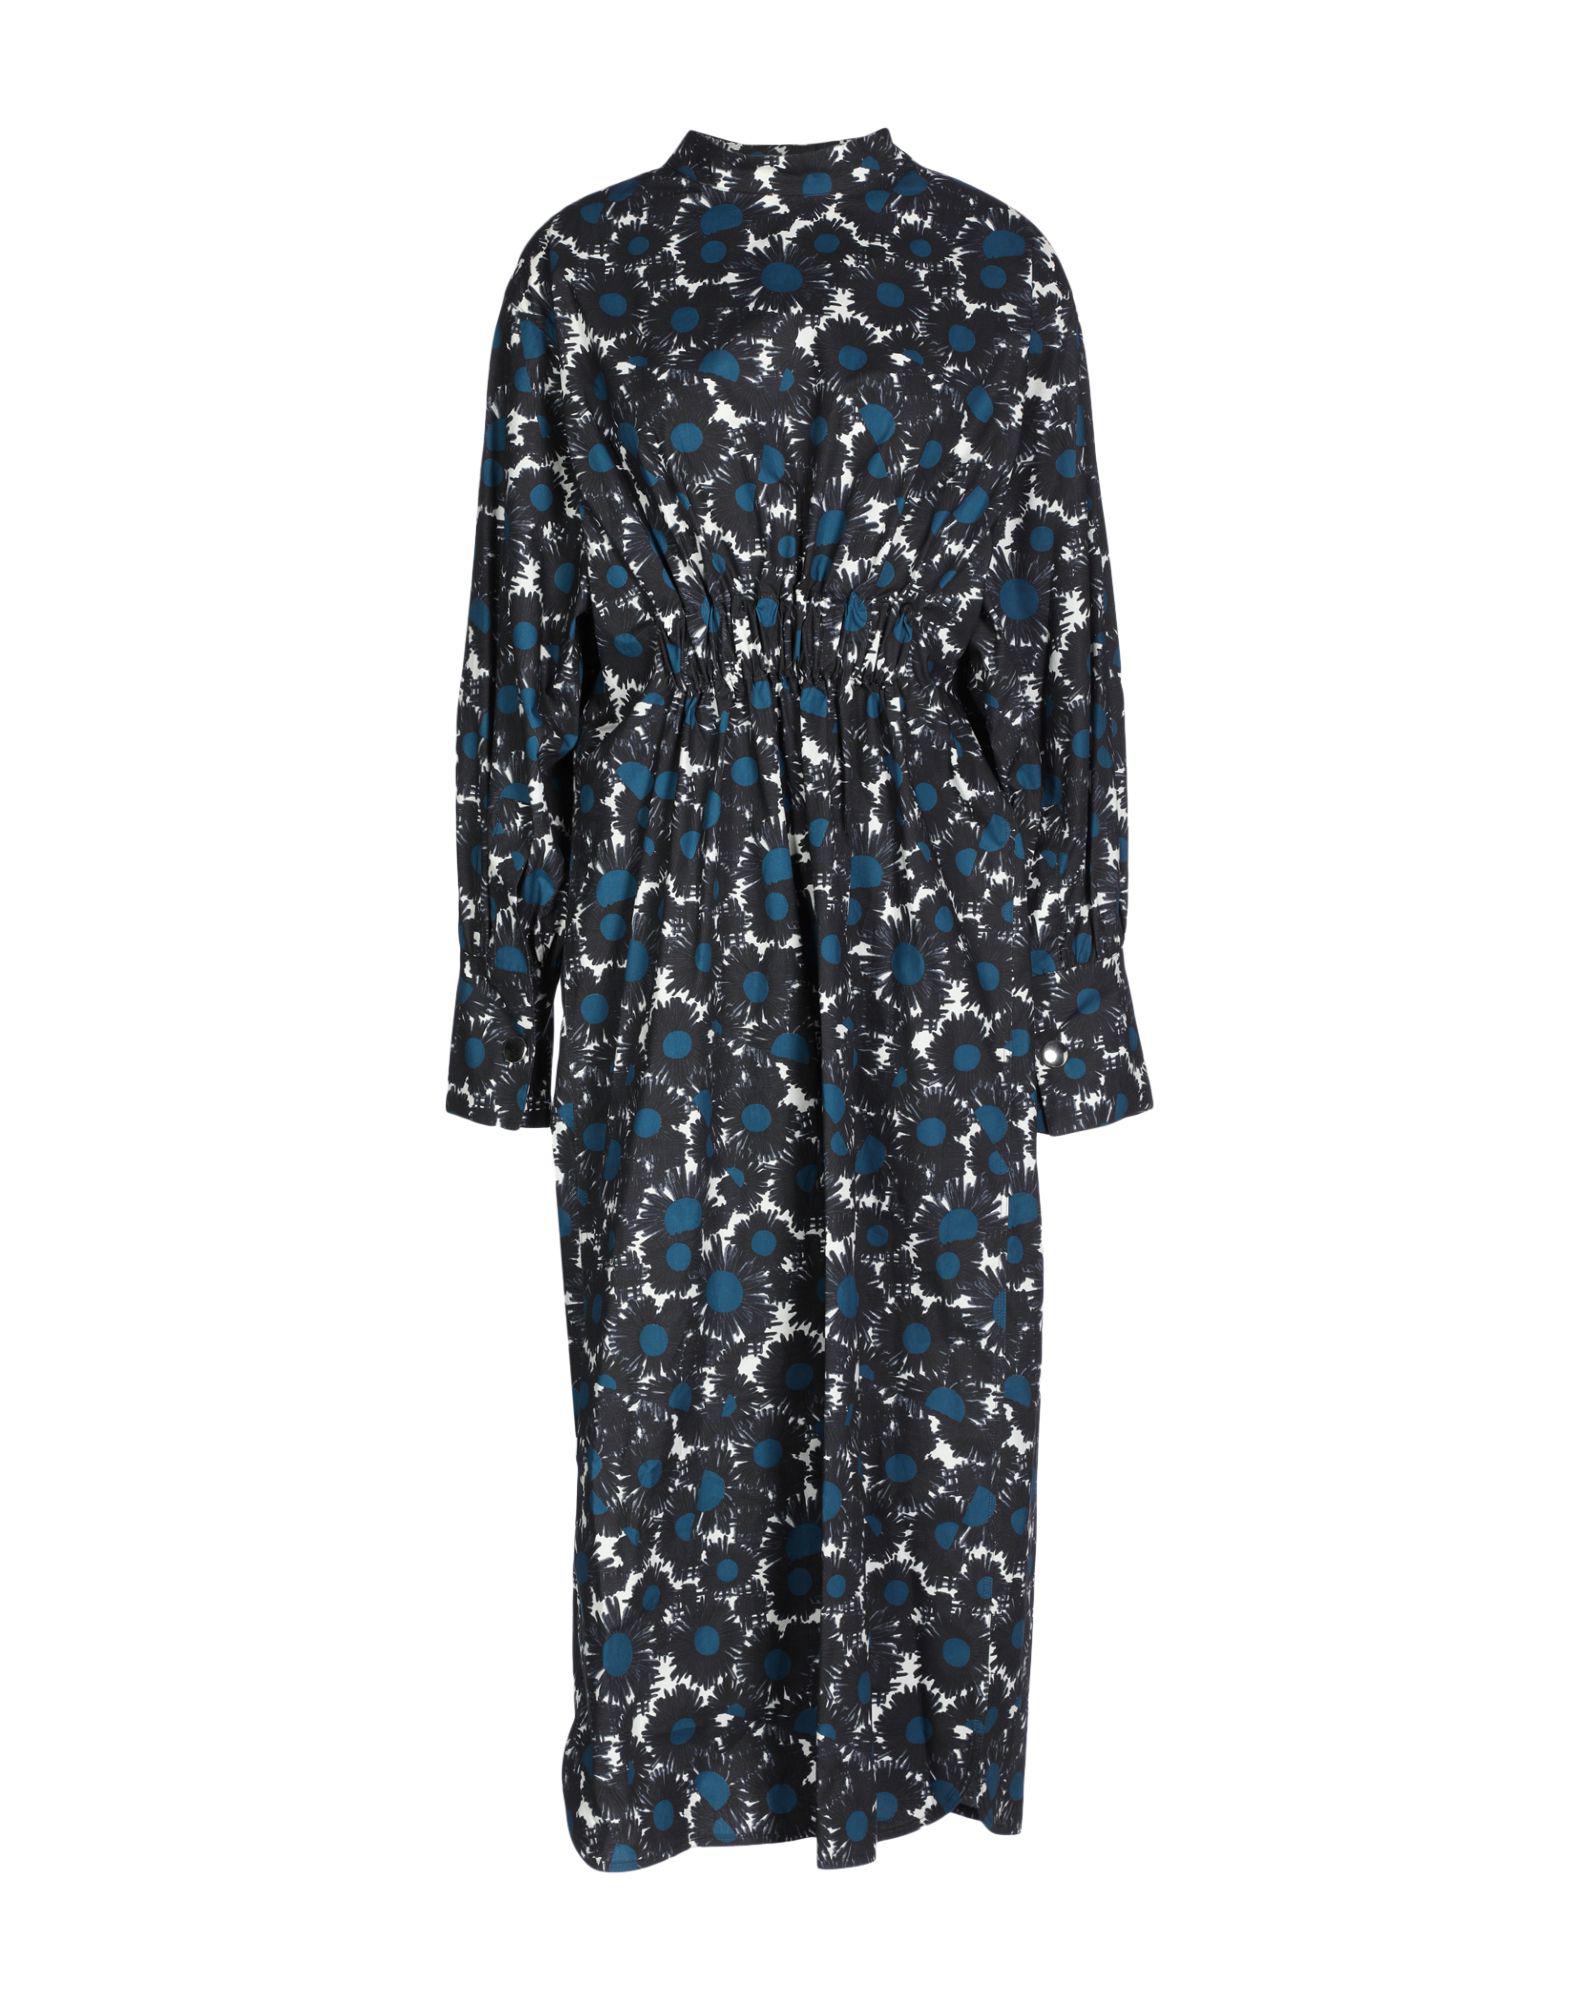 Marni Cotton 3/4 Length Dress in Dark Blue (Blue) - Lyst